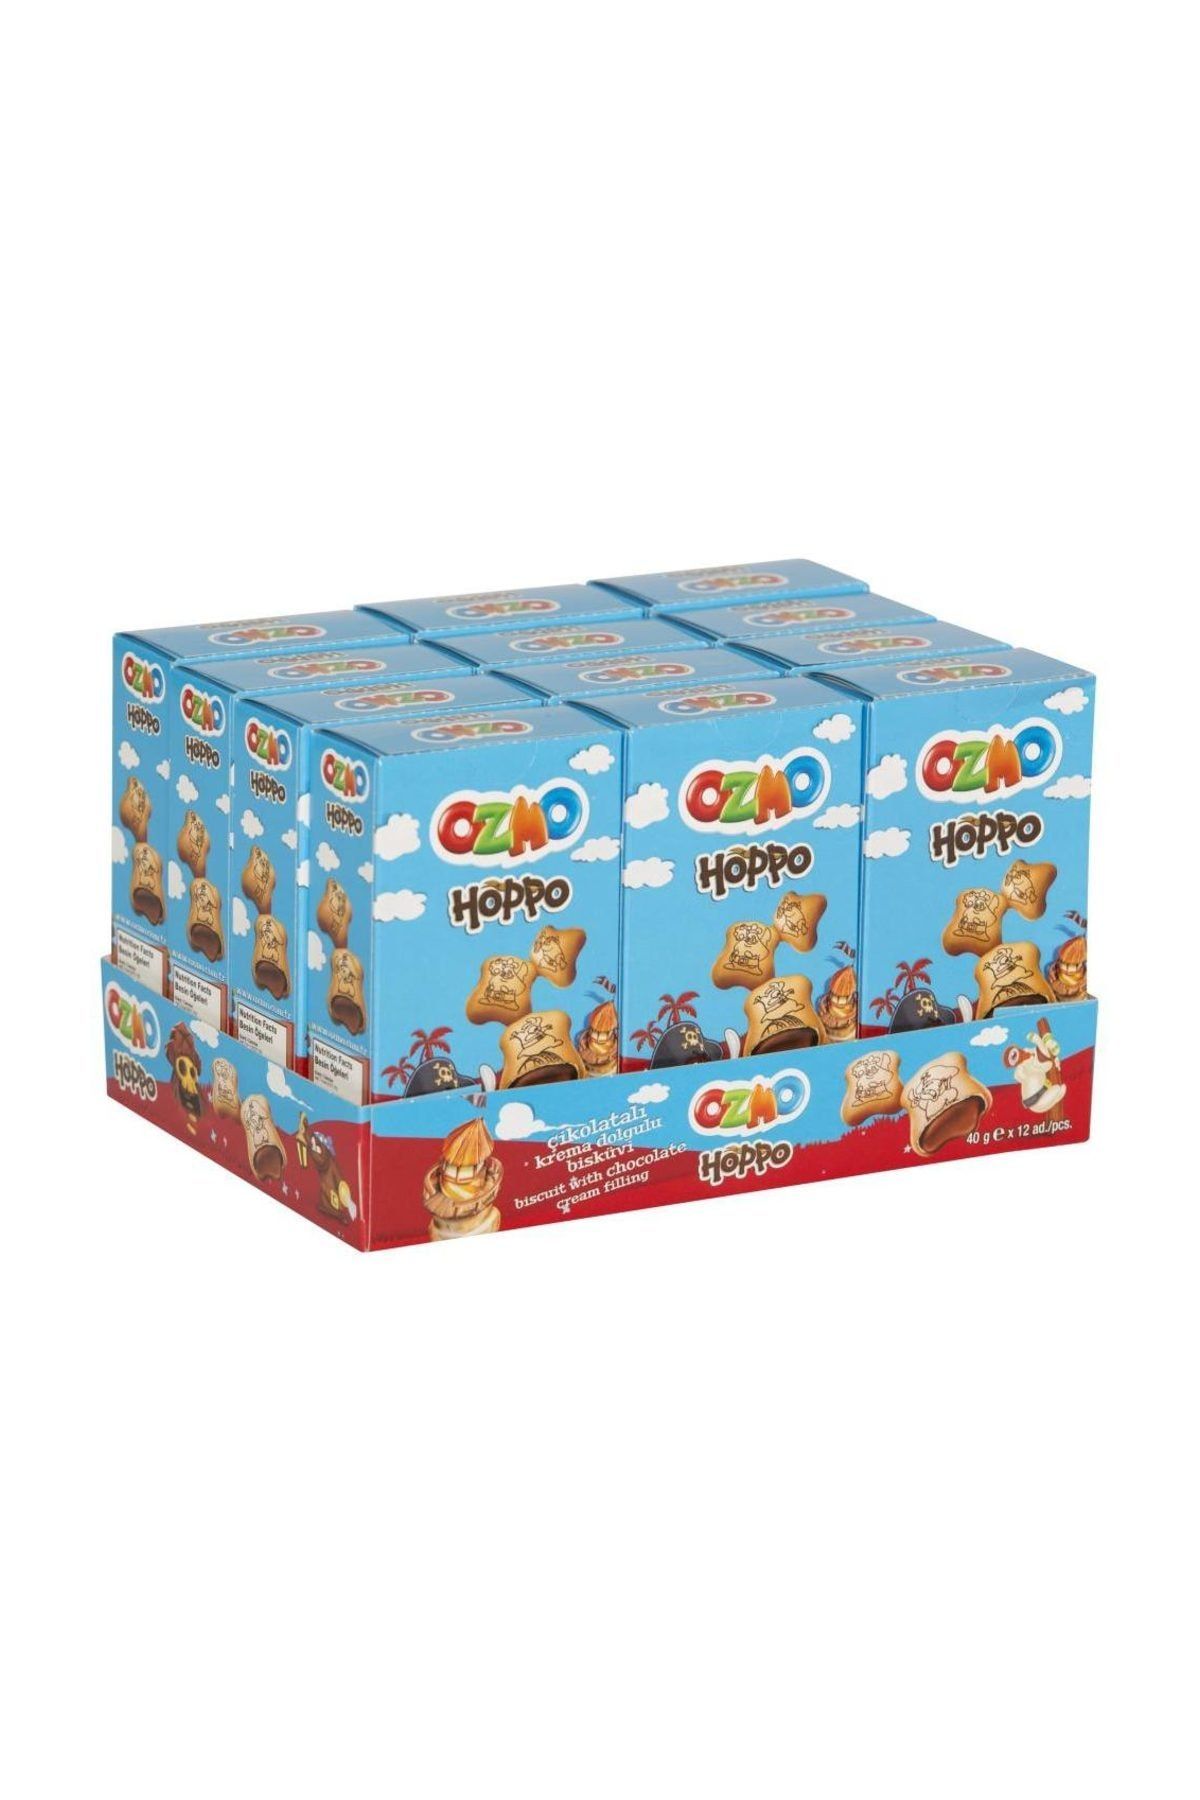 Genel Markalar Ozmo Hoppo Çikolatalı Bisküvi 40 G 12'li